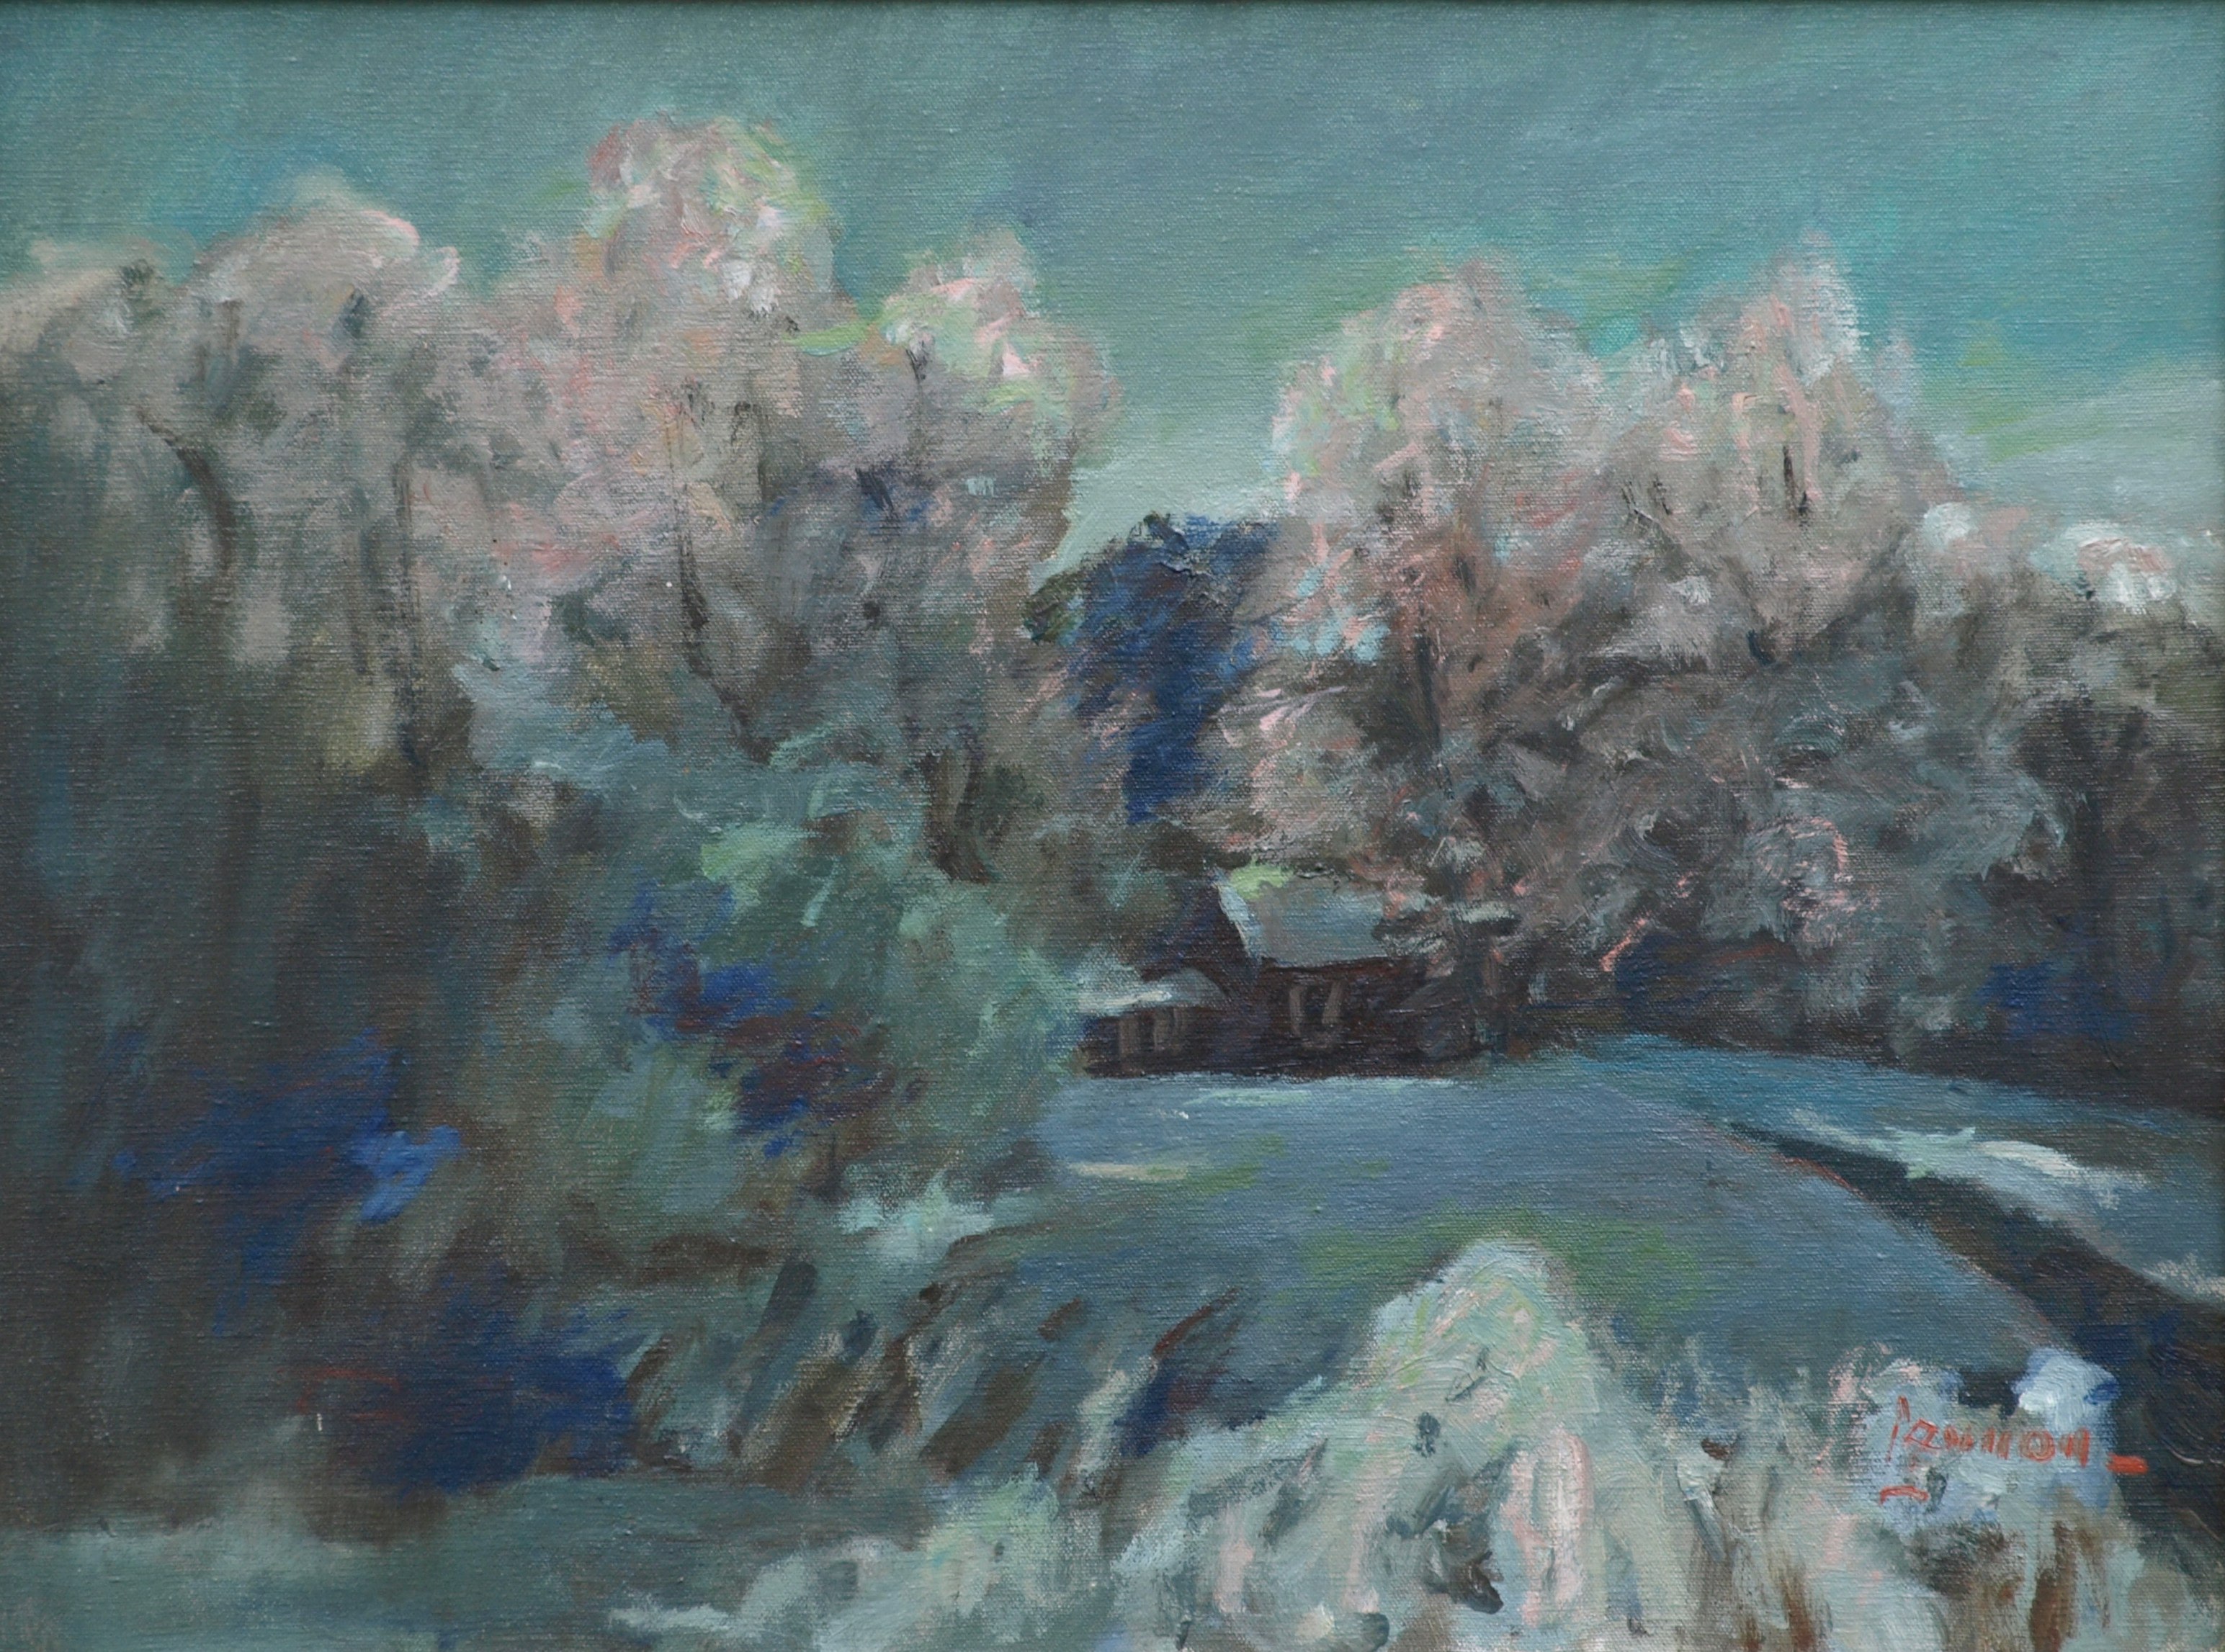 Snowbound (Artist's House), Oil on Canvas, 18 x 24 Inches, by Bernard Lennon, $850